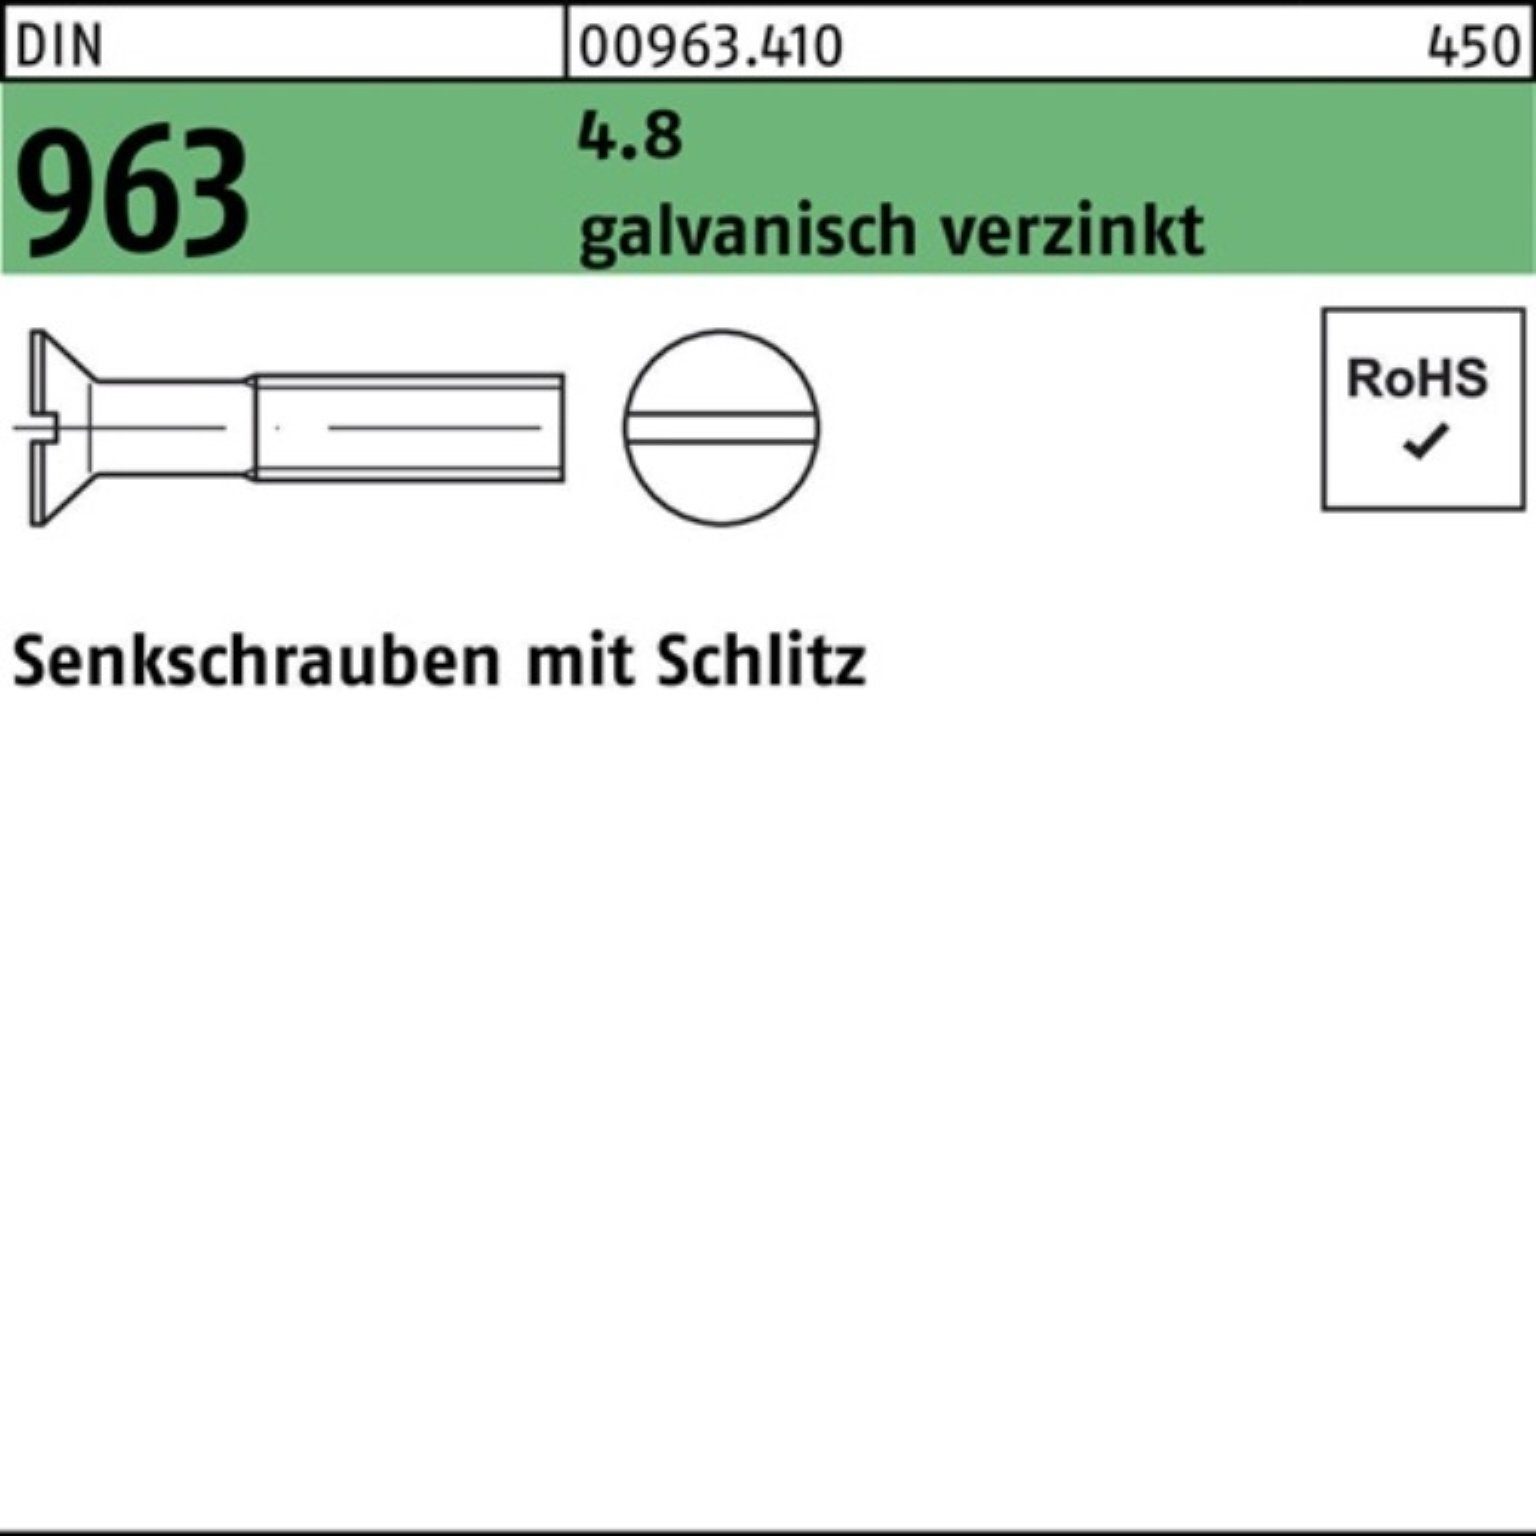 Verkauf! Reyher Senkschraube 200er Pack Senkschraube M2x 200 galv.verz. 4.8 DIN 963 Stüc 5 Schlitz